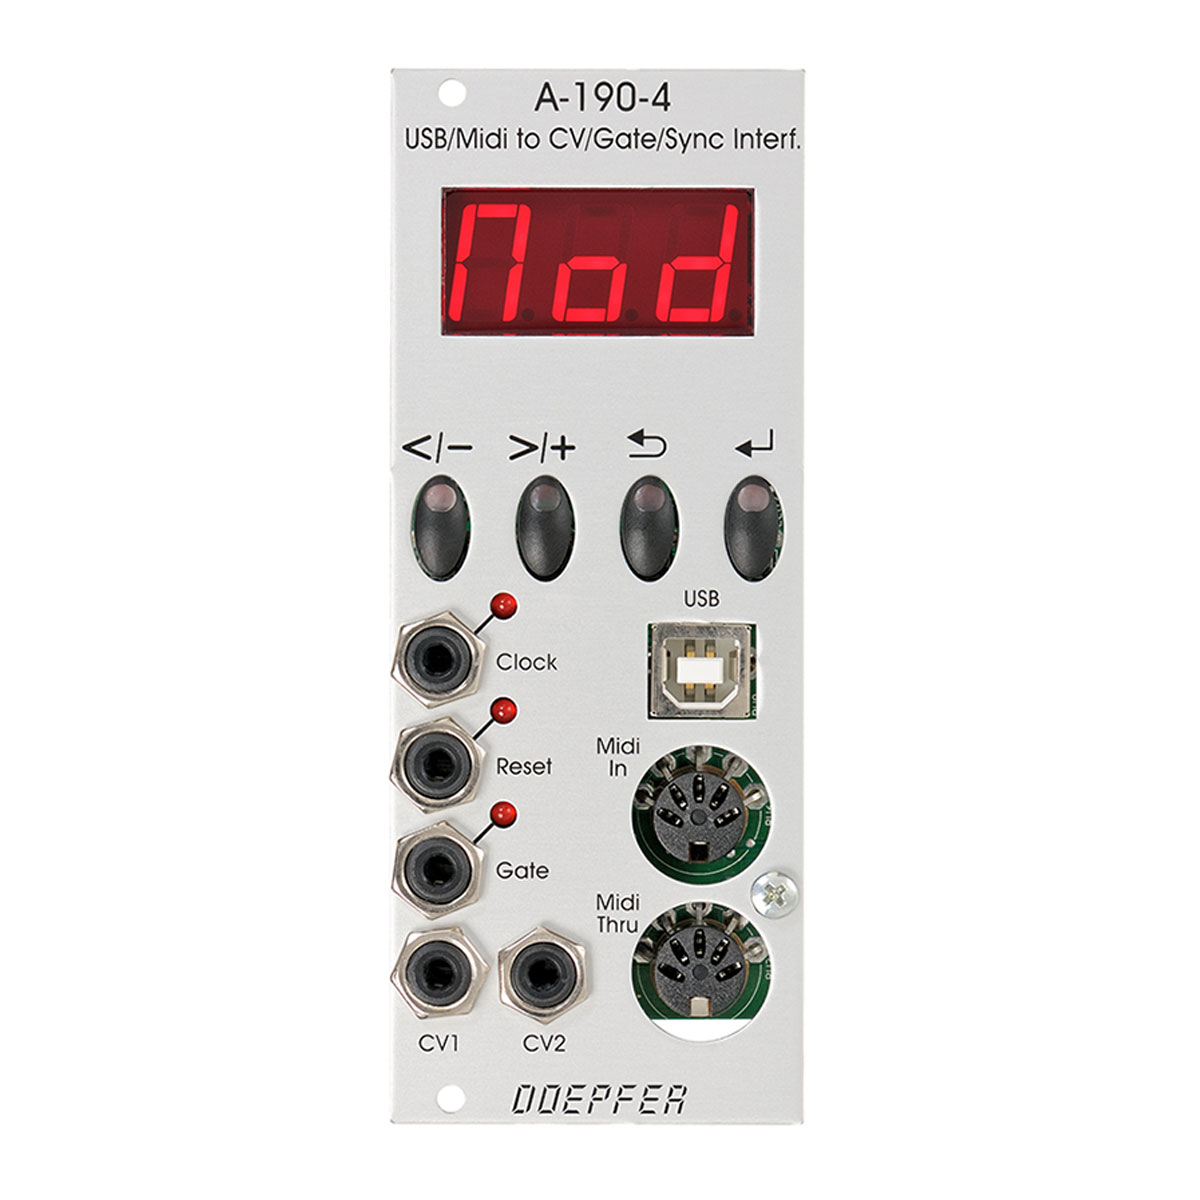 Doepfer A-190-8 USB/Midi to Sync Int.